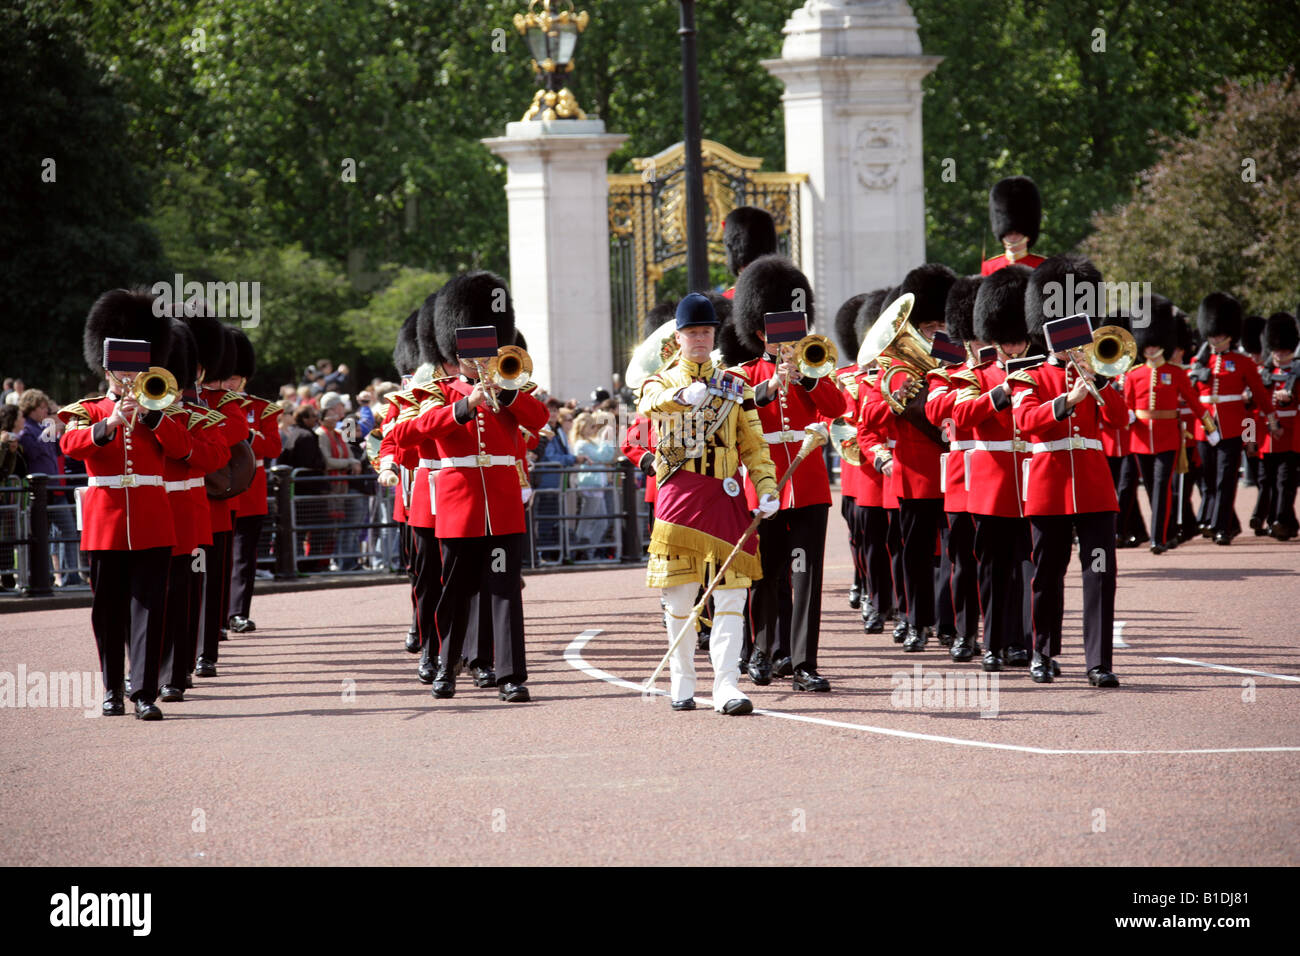 Der Scots Guards Band Marching Vergangenheit Buckingham Palace London Trooping die Farbe Zeremonie 14. Juni 2008 Stockfoto